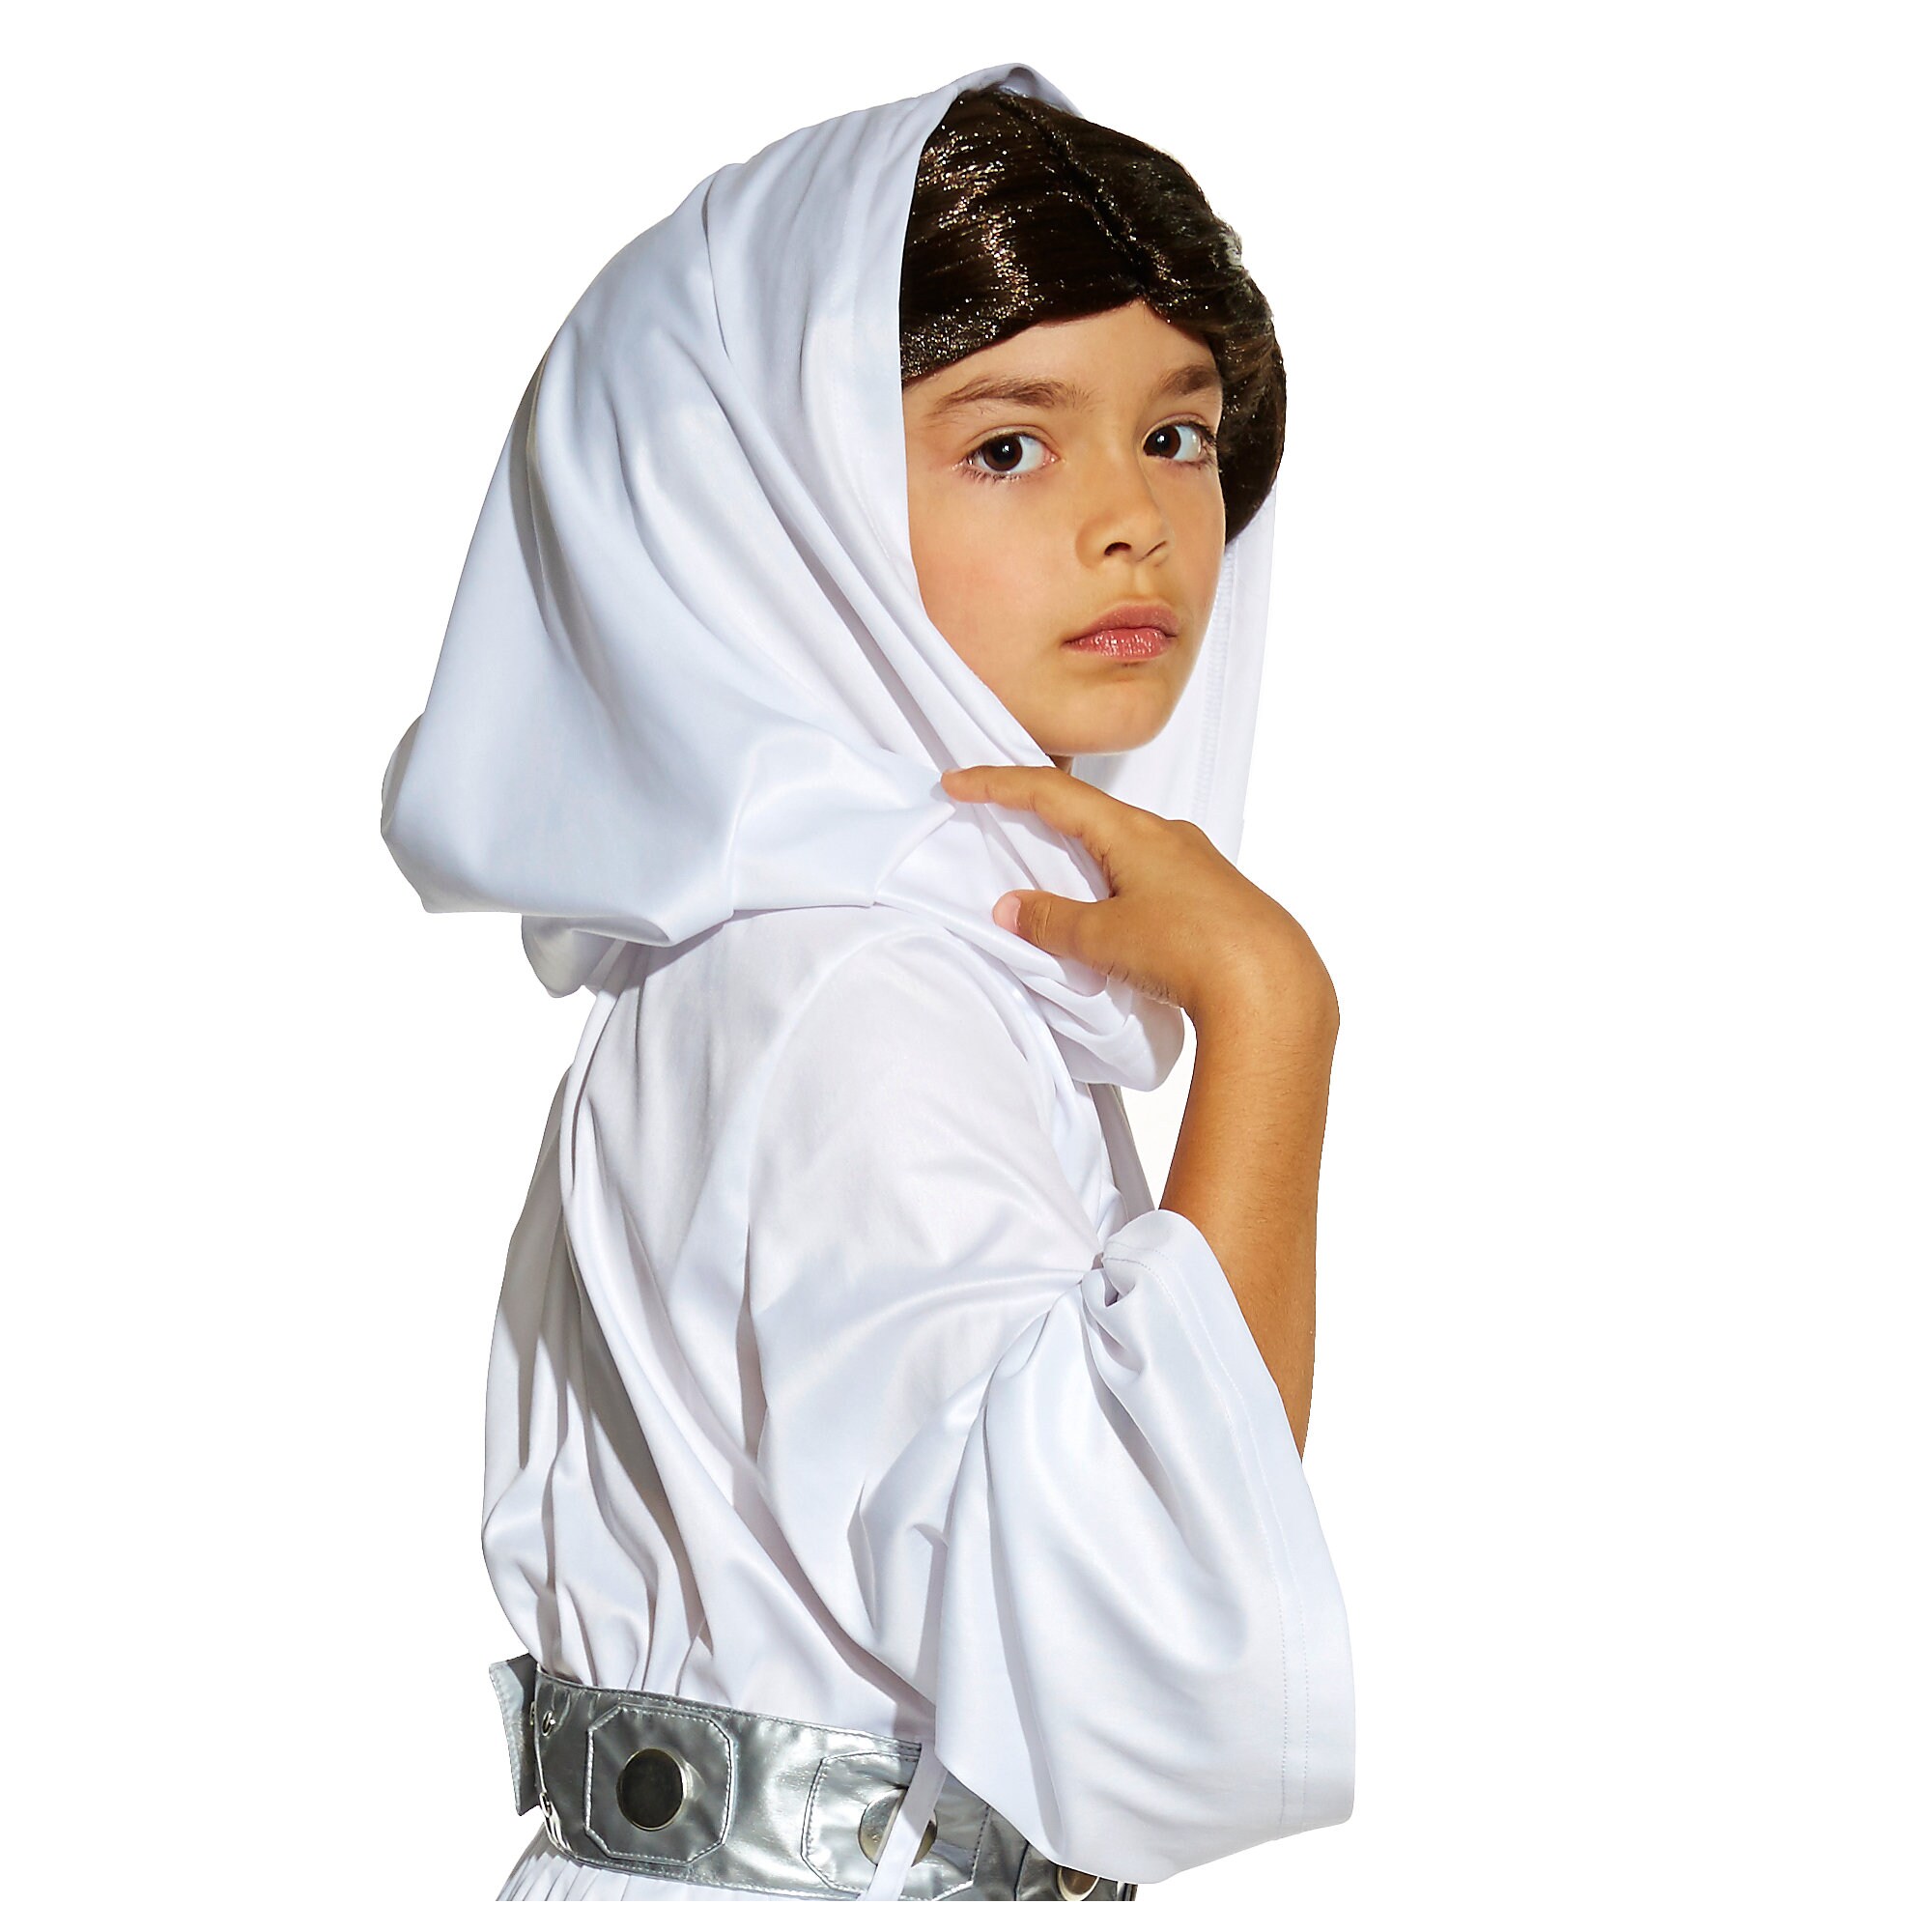 Princess Leia Costume for Kids 